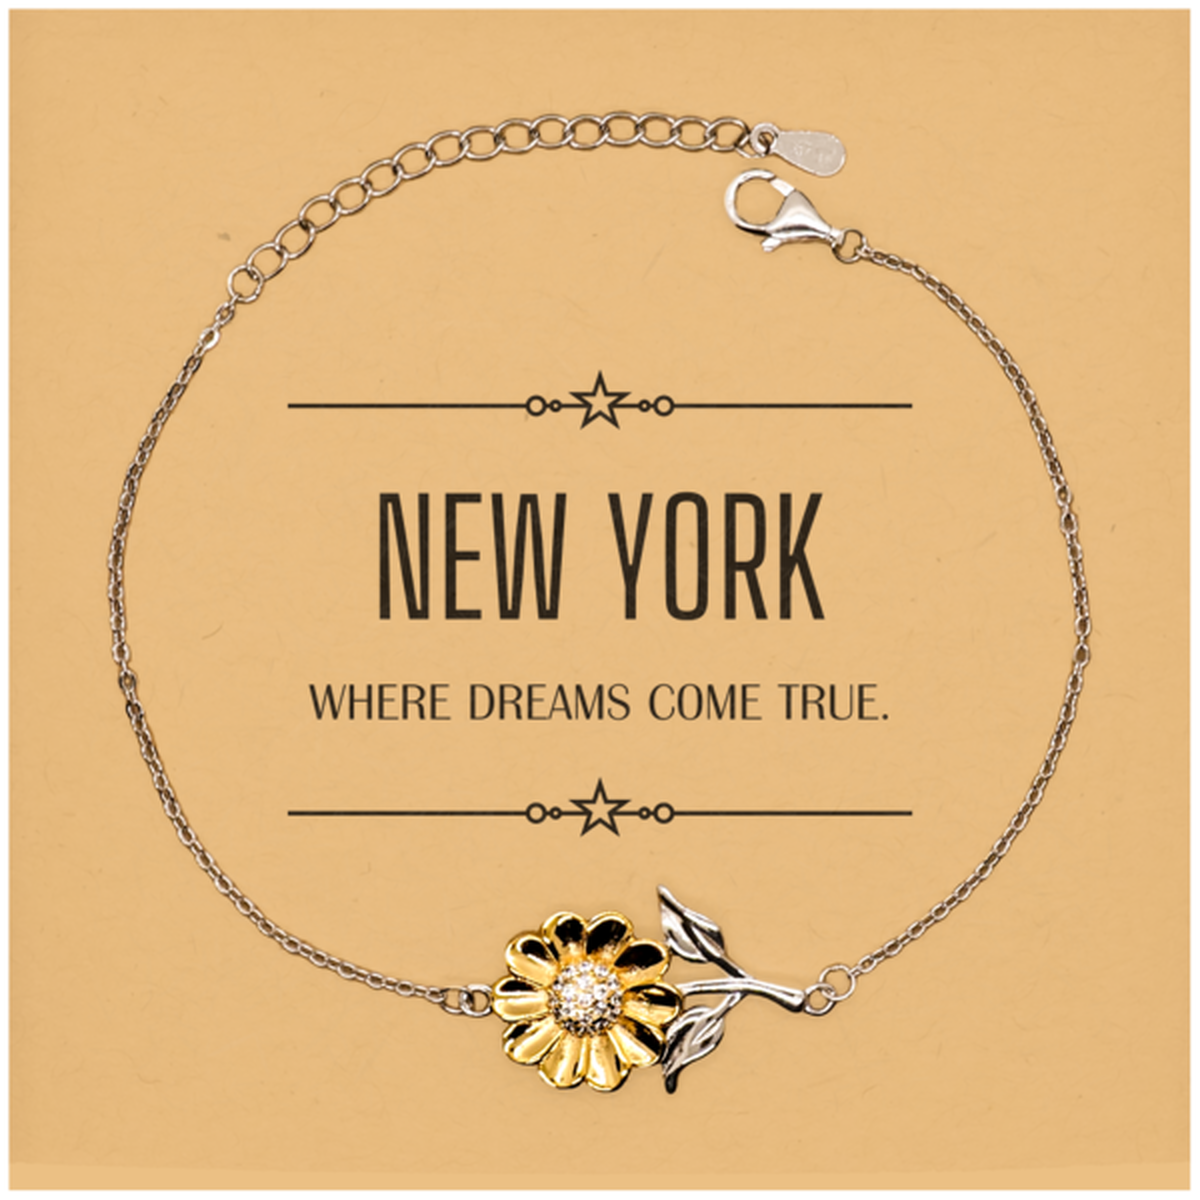 Love New York State Sunflower Bracelet, New York Where dreams come true, Birthday Christmas Inspirational Gifts For New York Men, Women, Friends